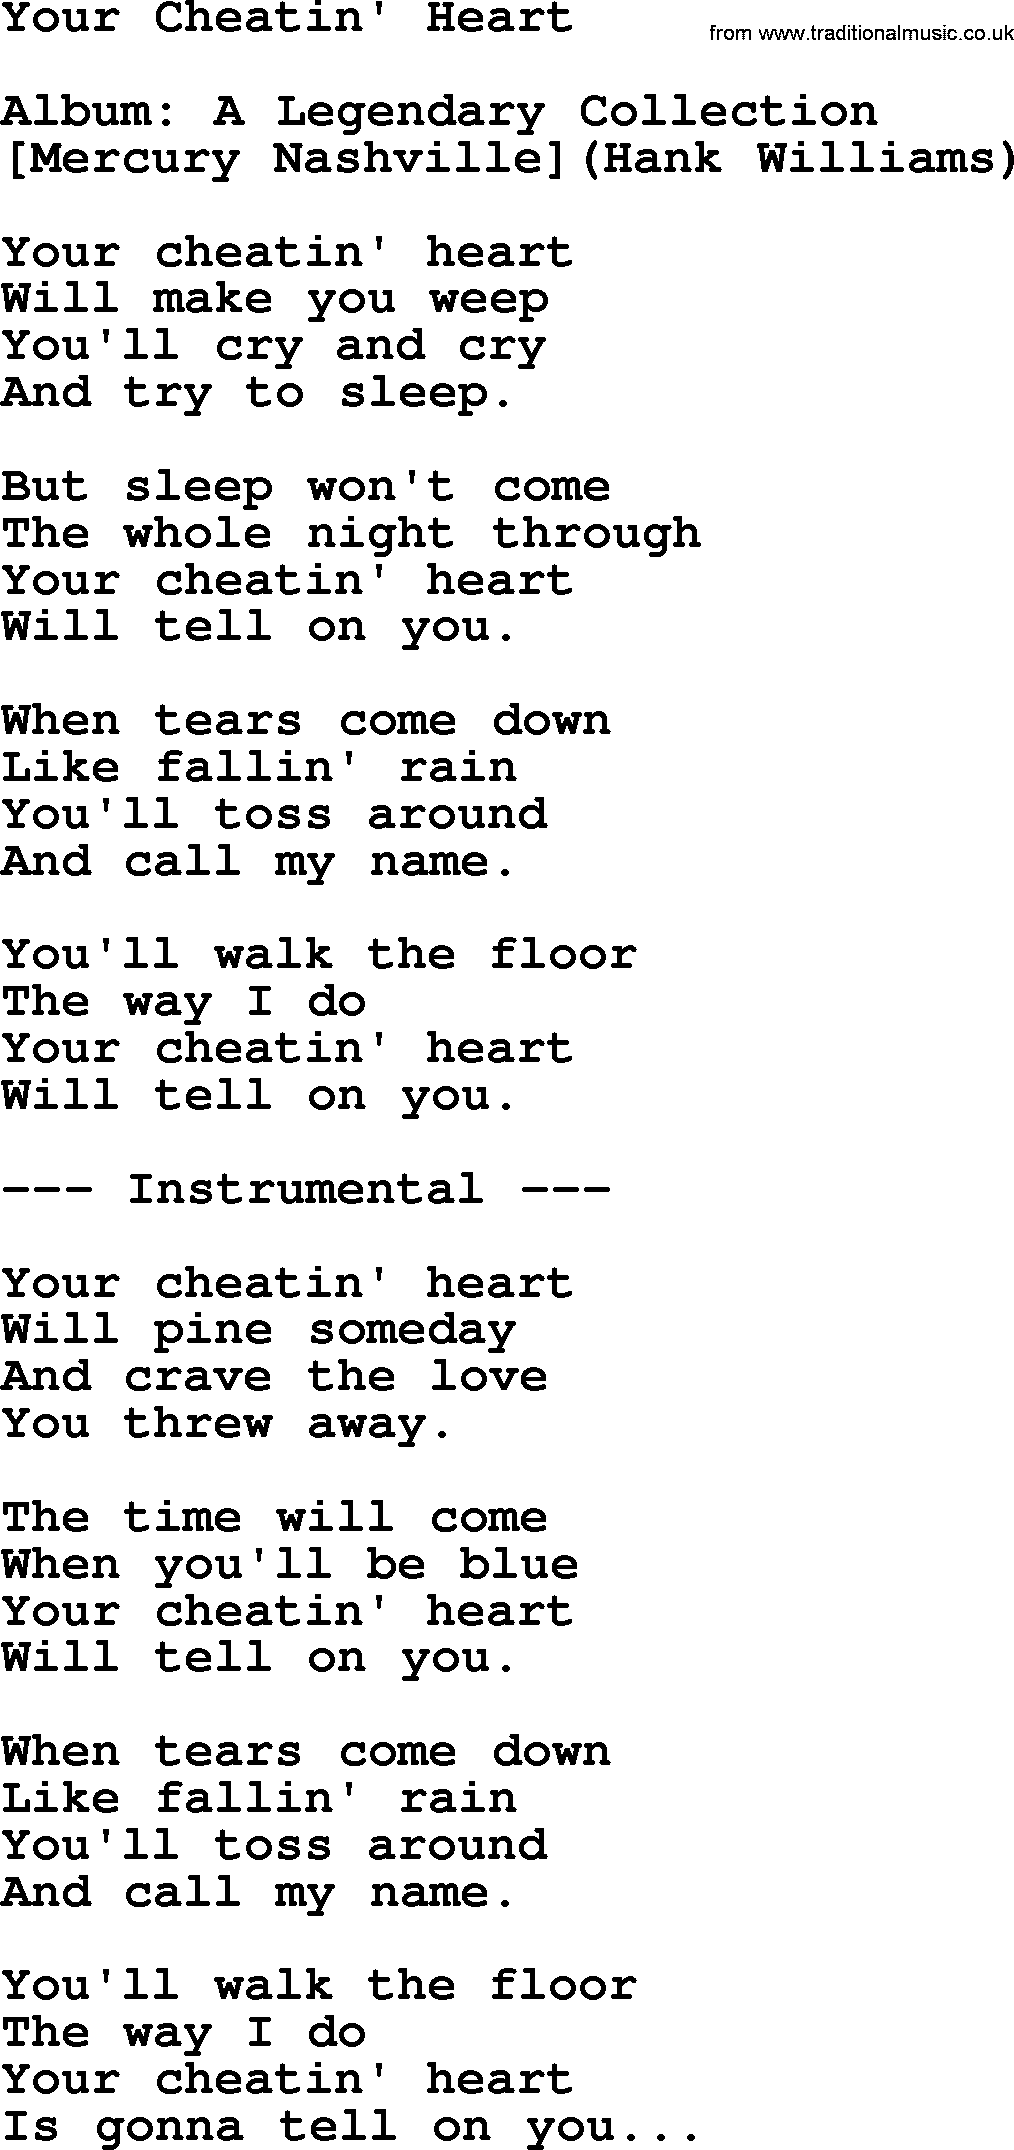 Hank Williams song Your Cheatin' Heart, lyrics